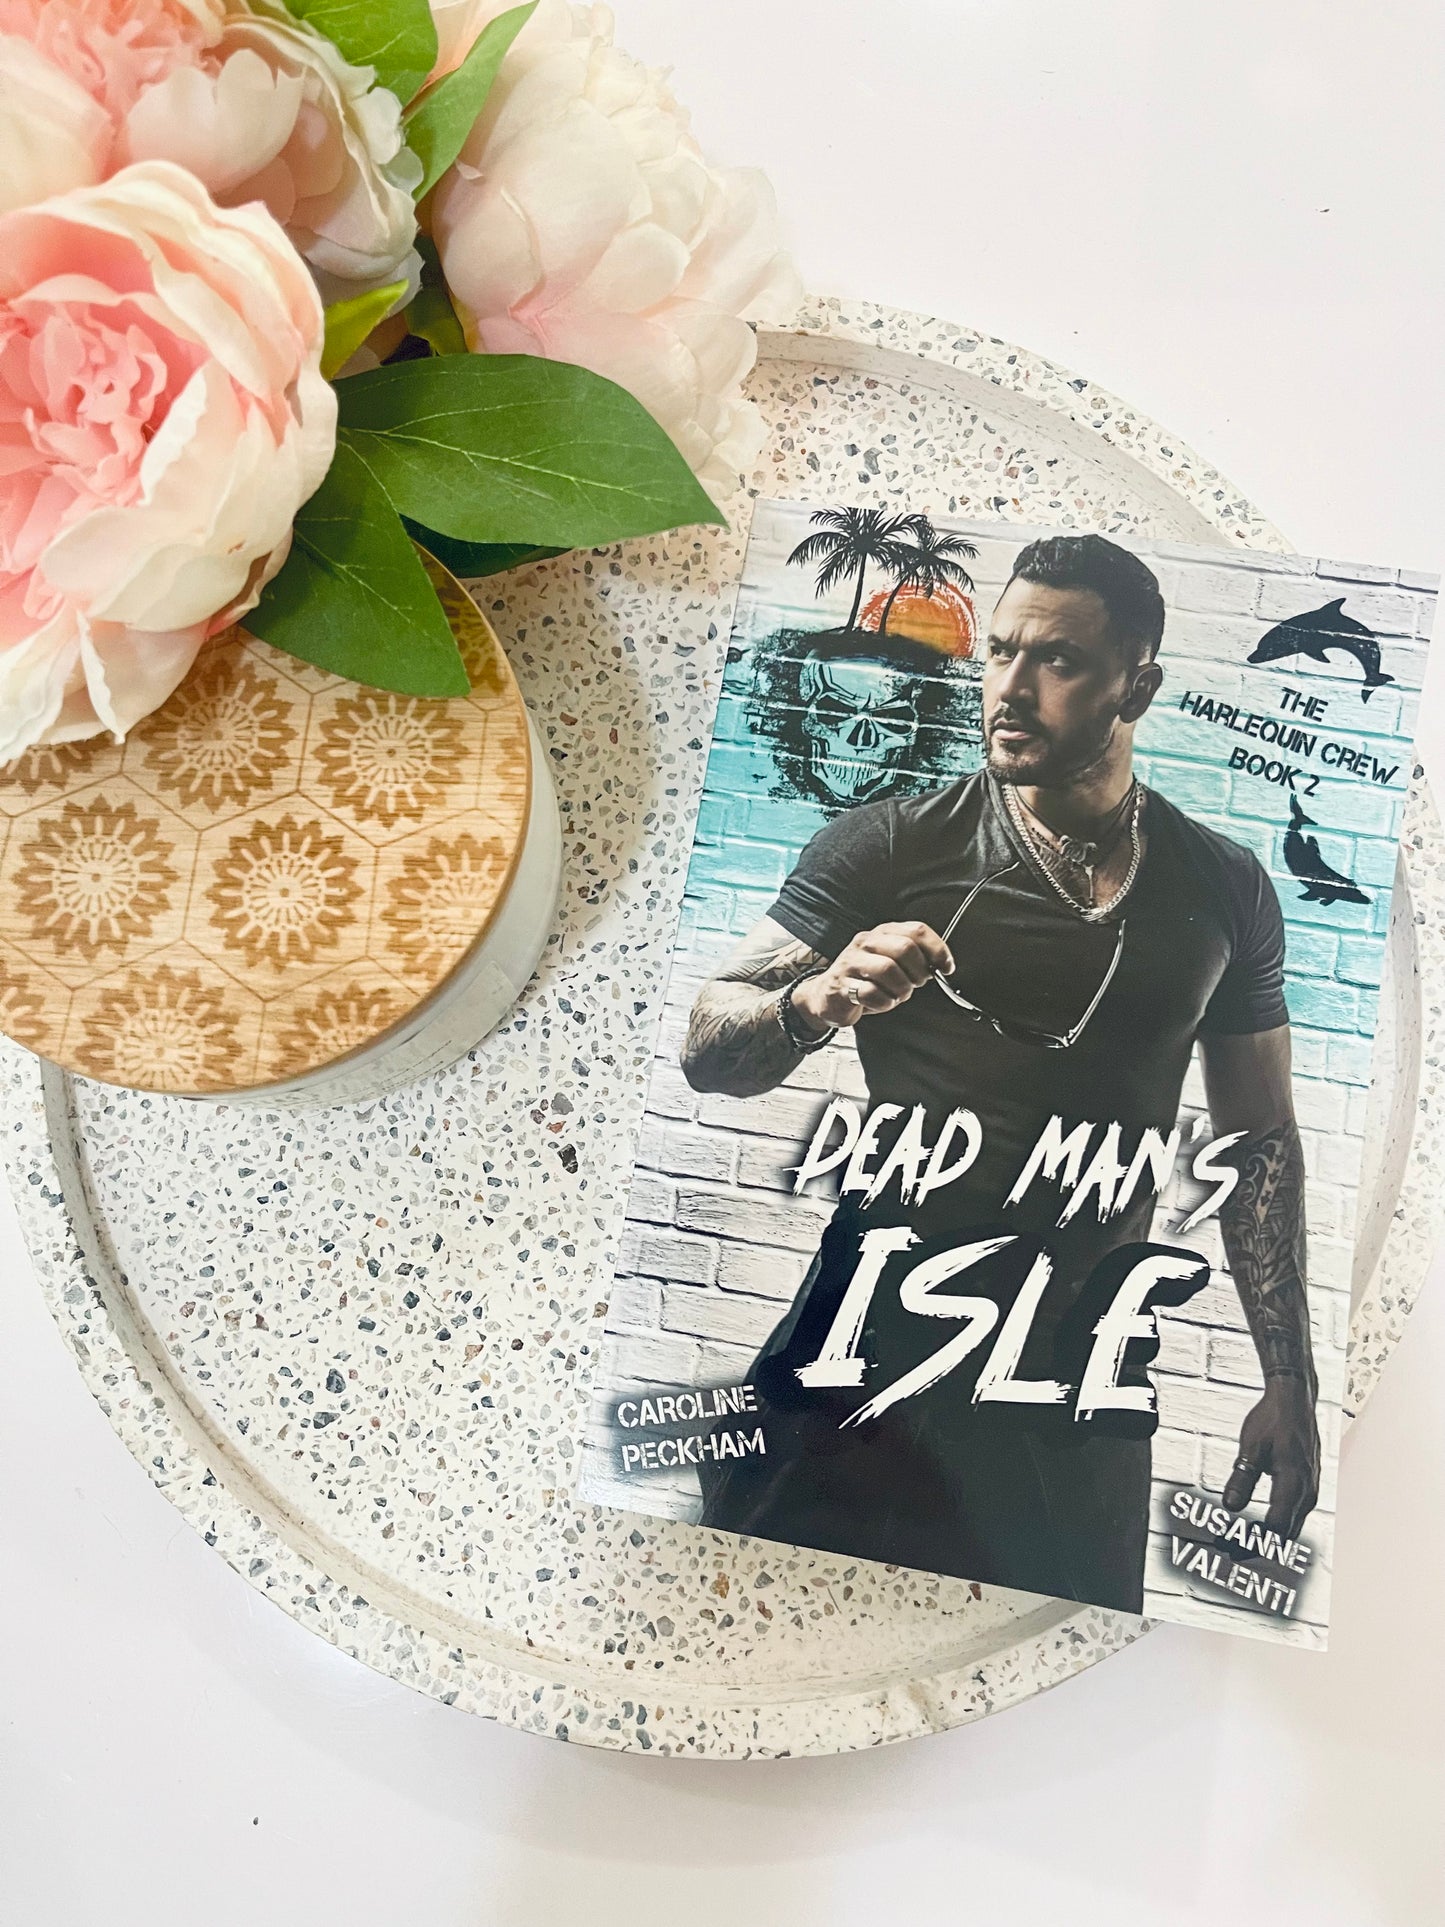 Dead Man's Isle by Caroline Peckham & Susanne Valenti (The Harlequin Crew Book 2)